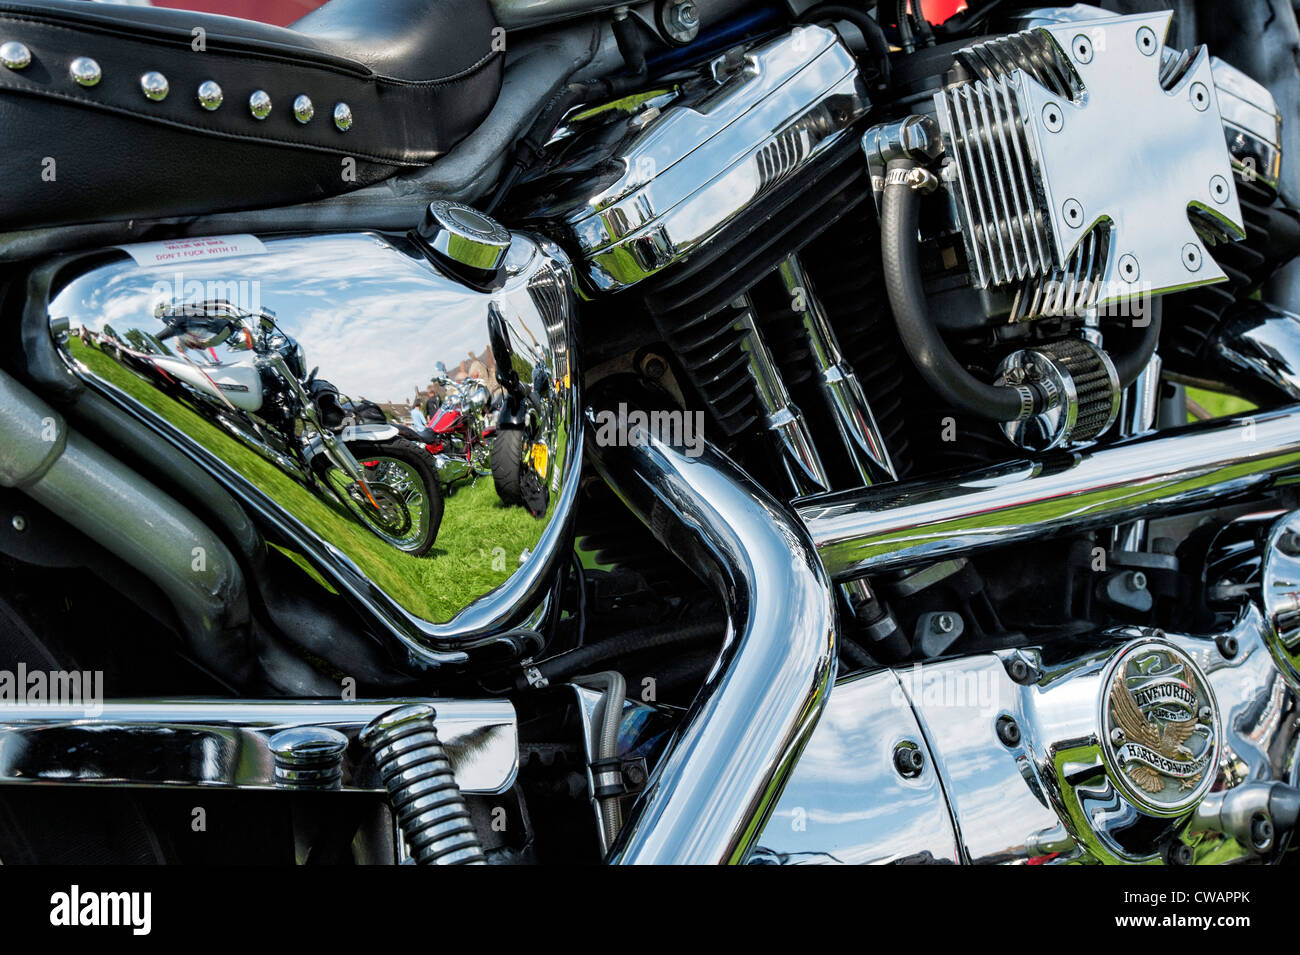 Harley Davidson motorcycle details Stock Photo